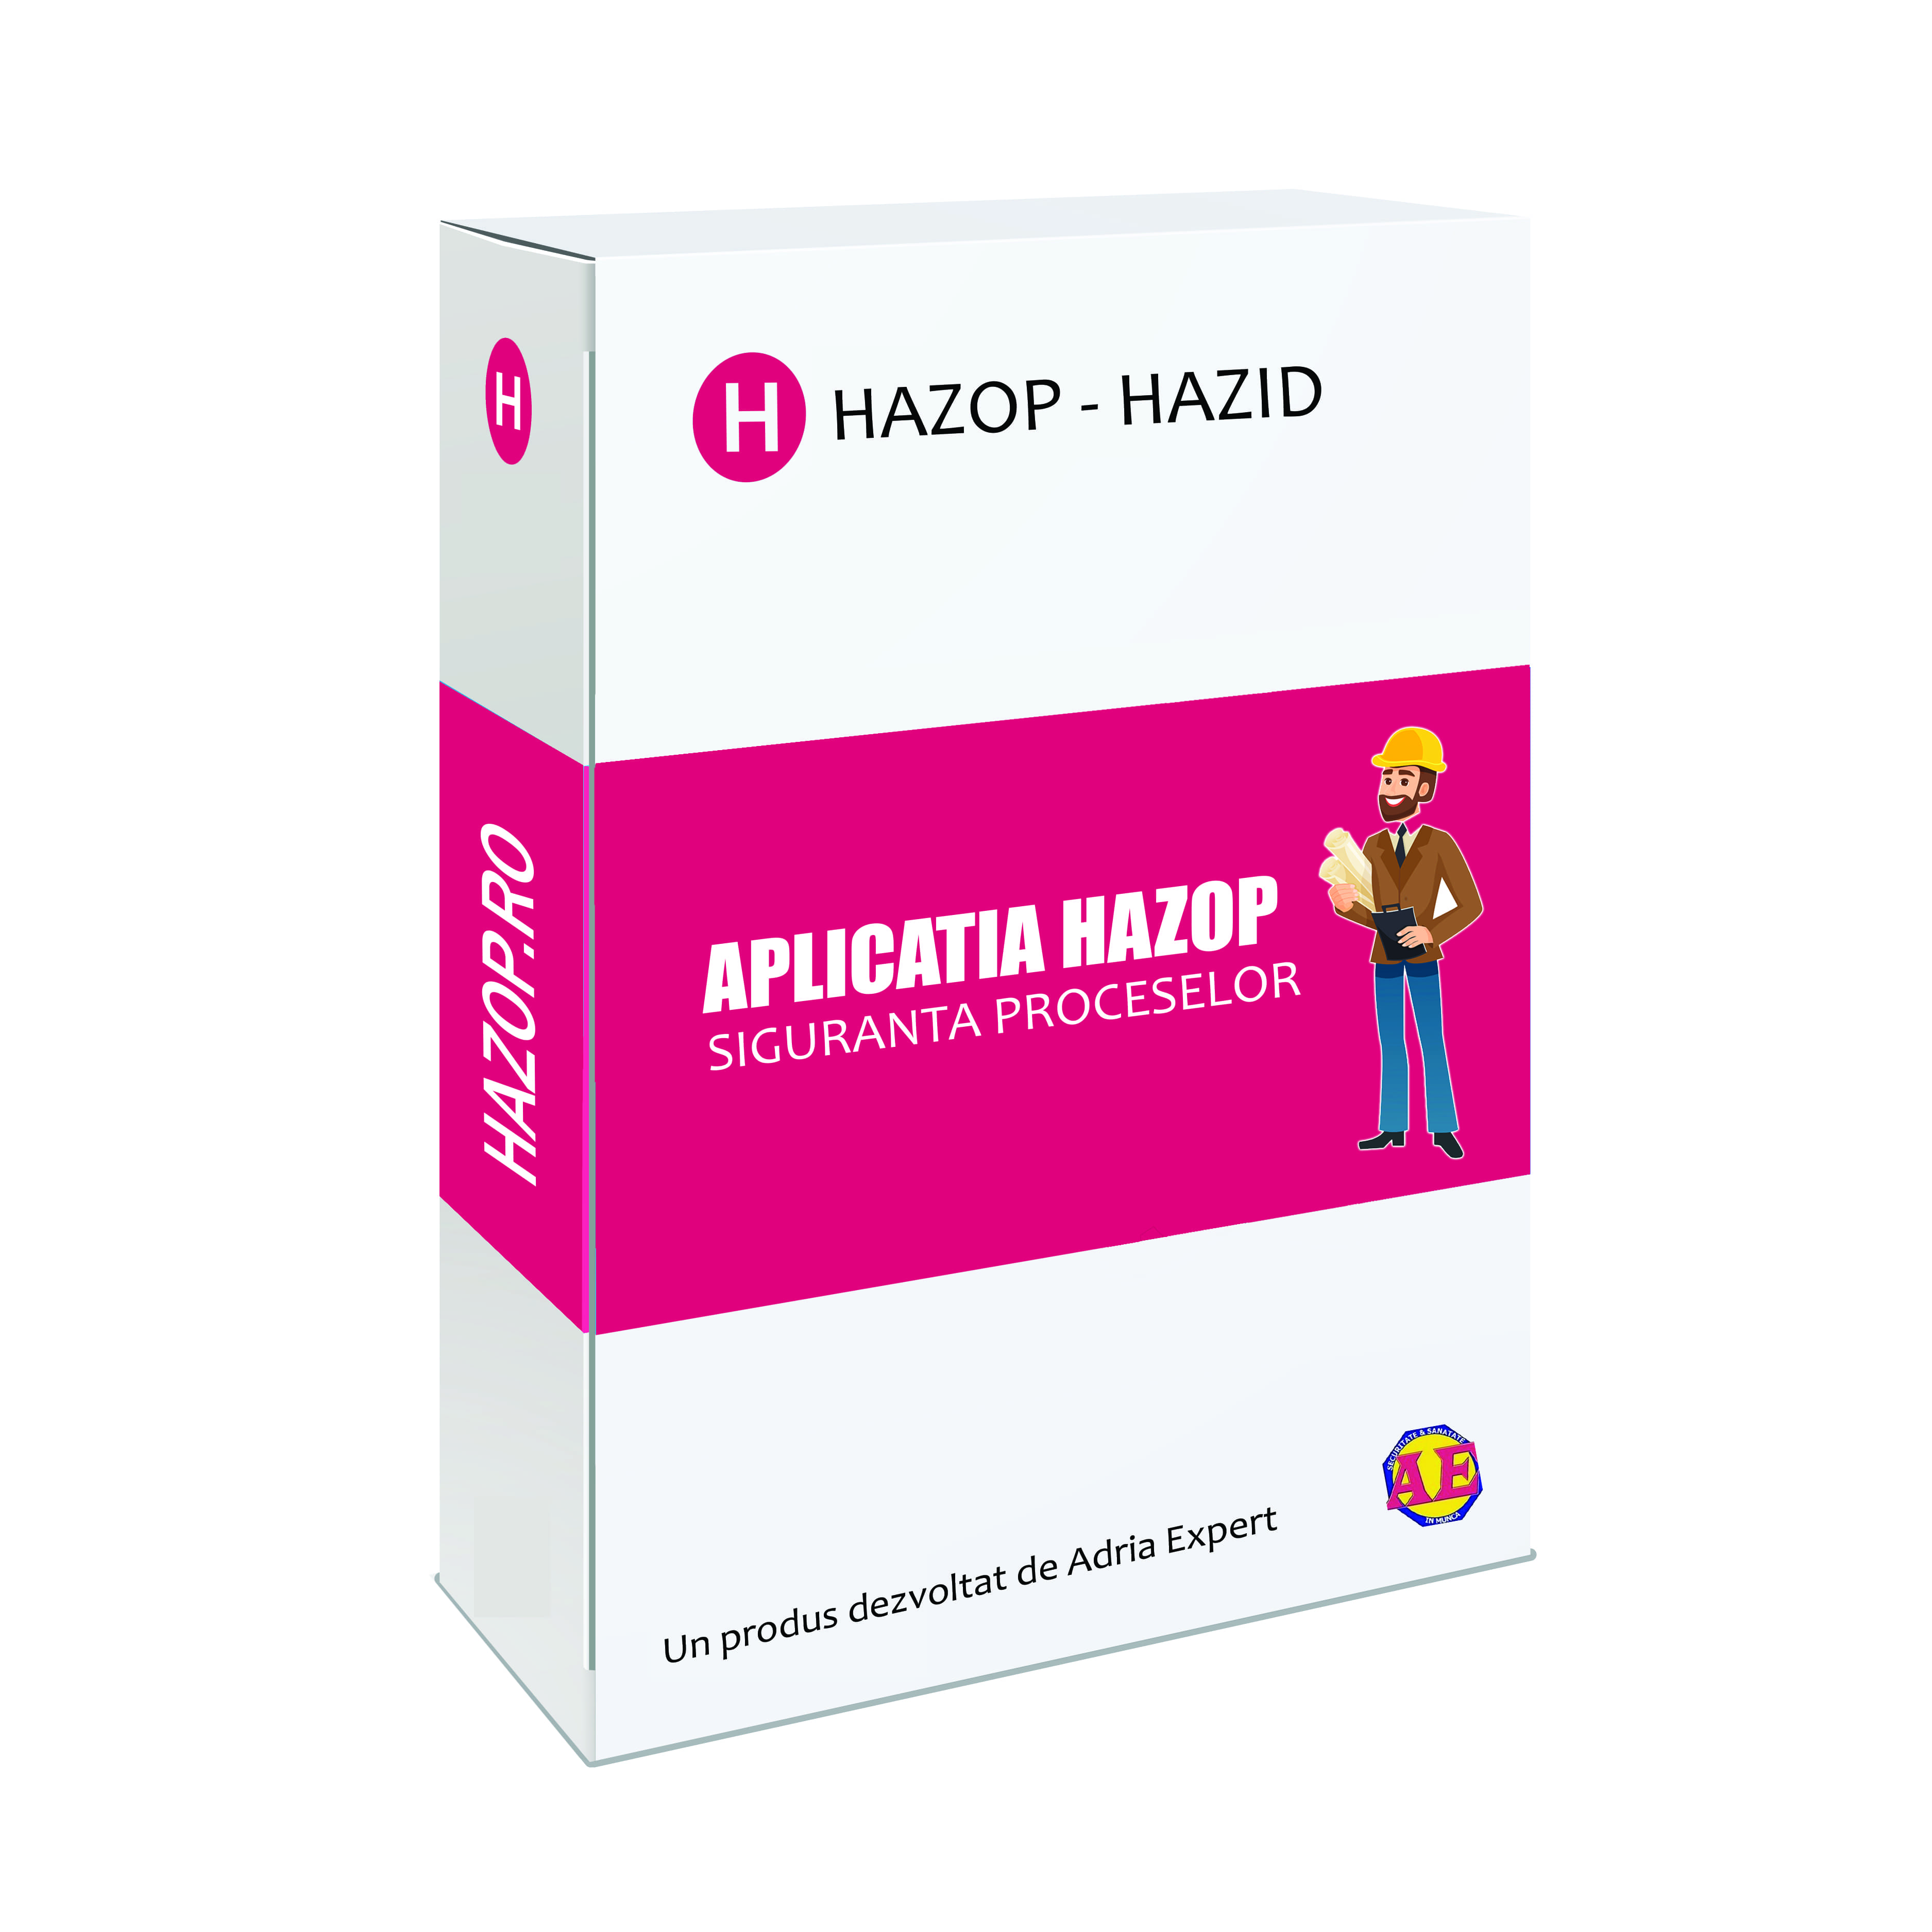 Hazop Hazid Software- Safety Process